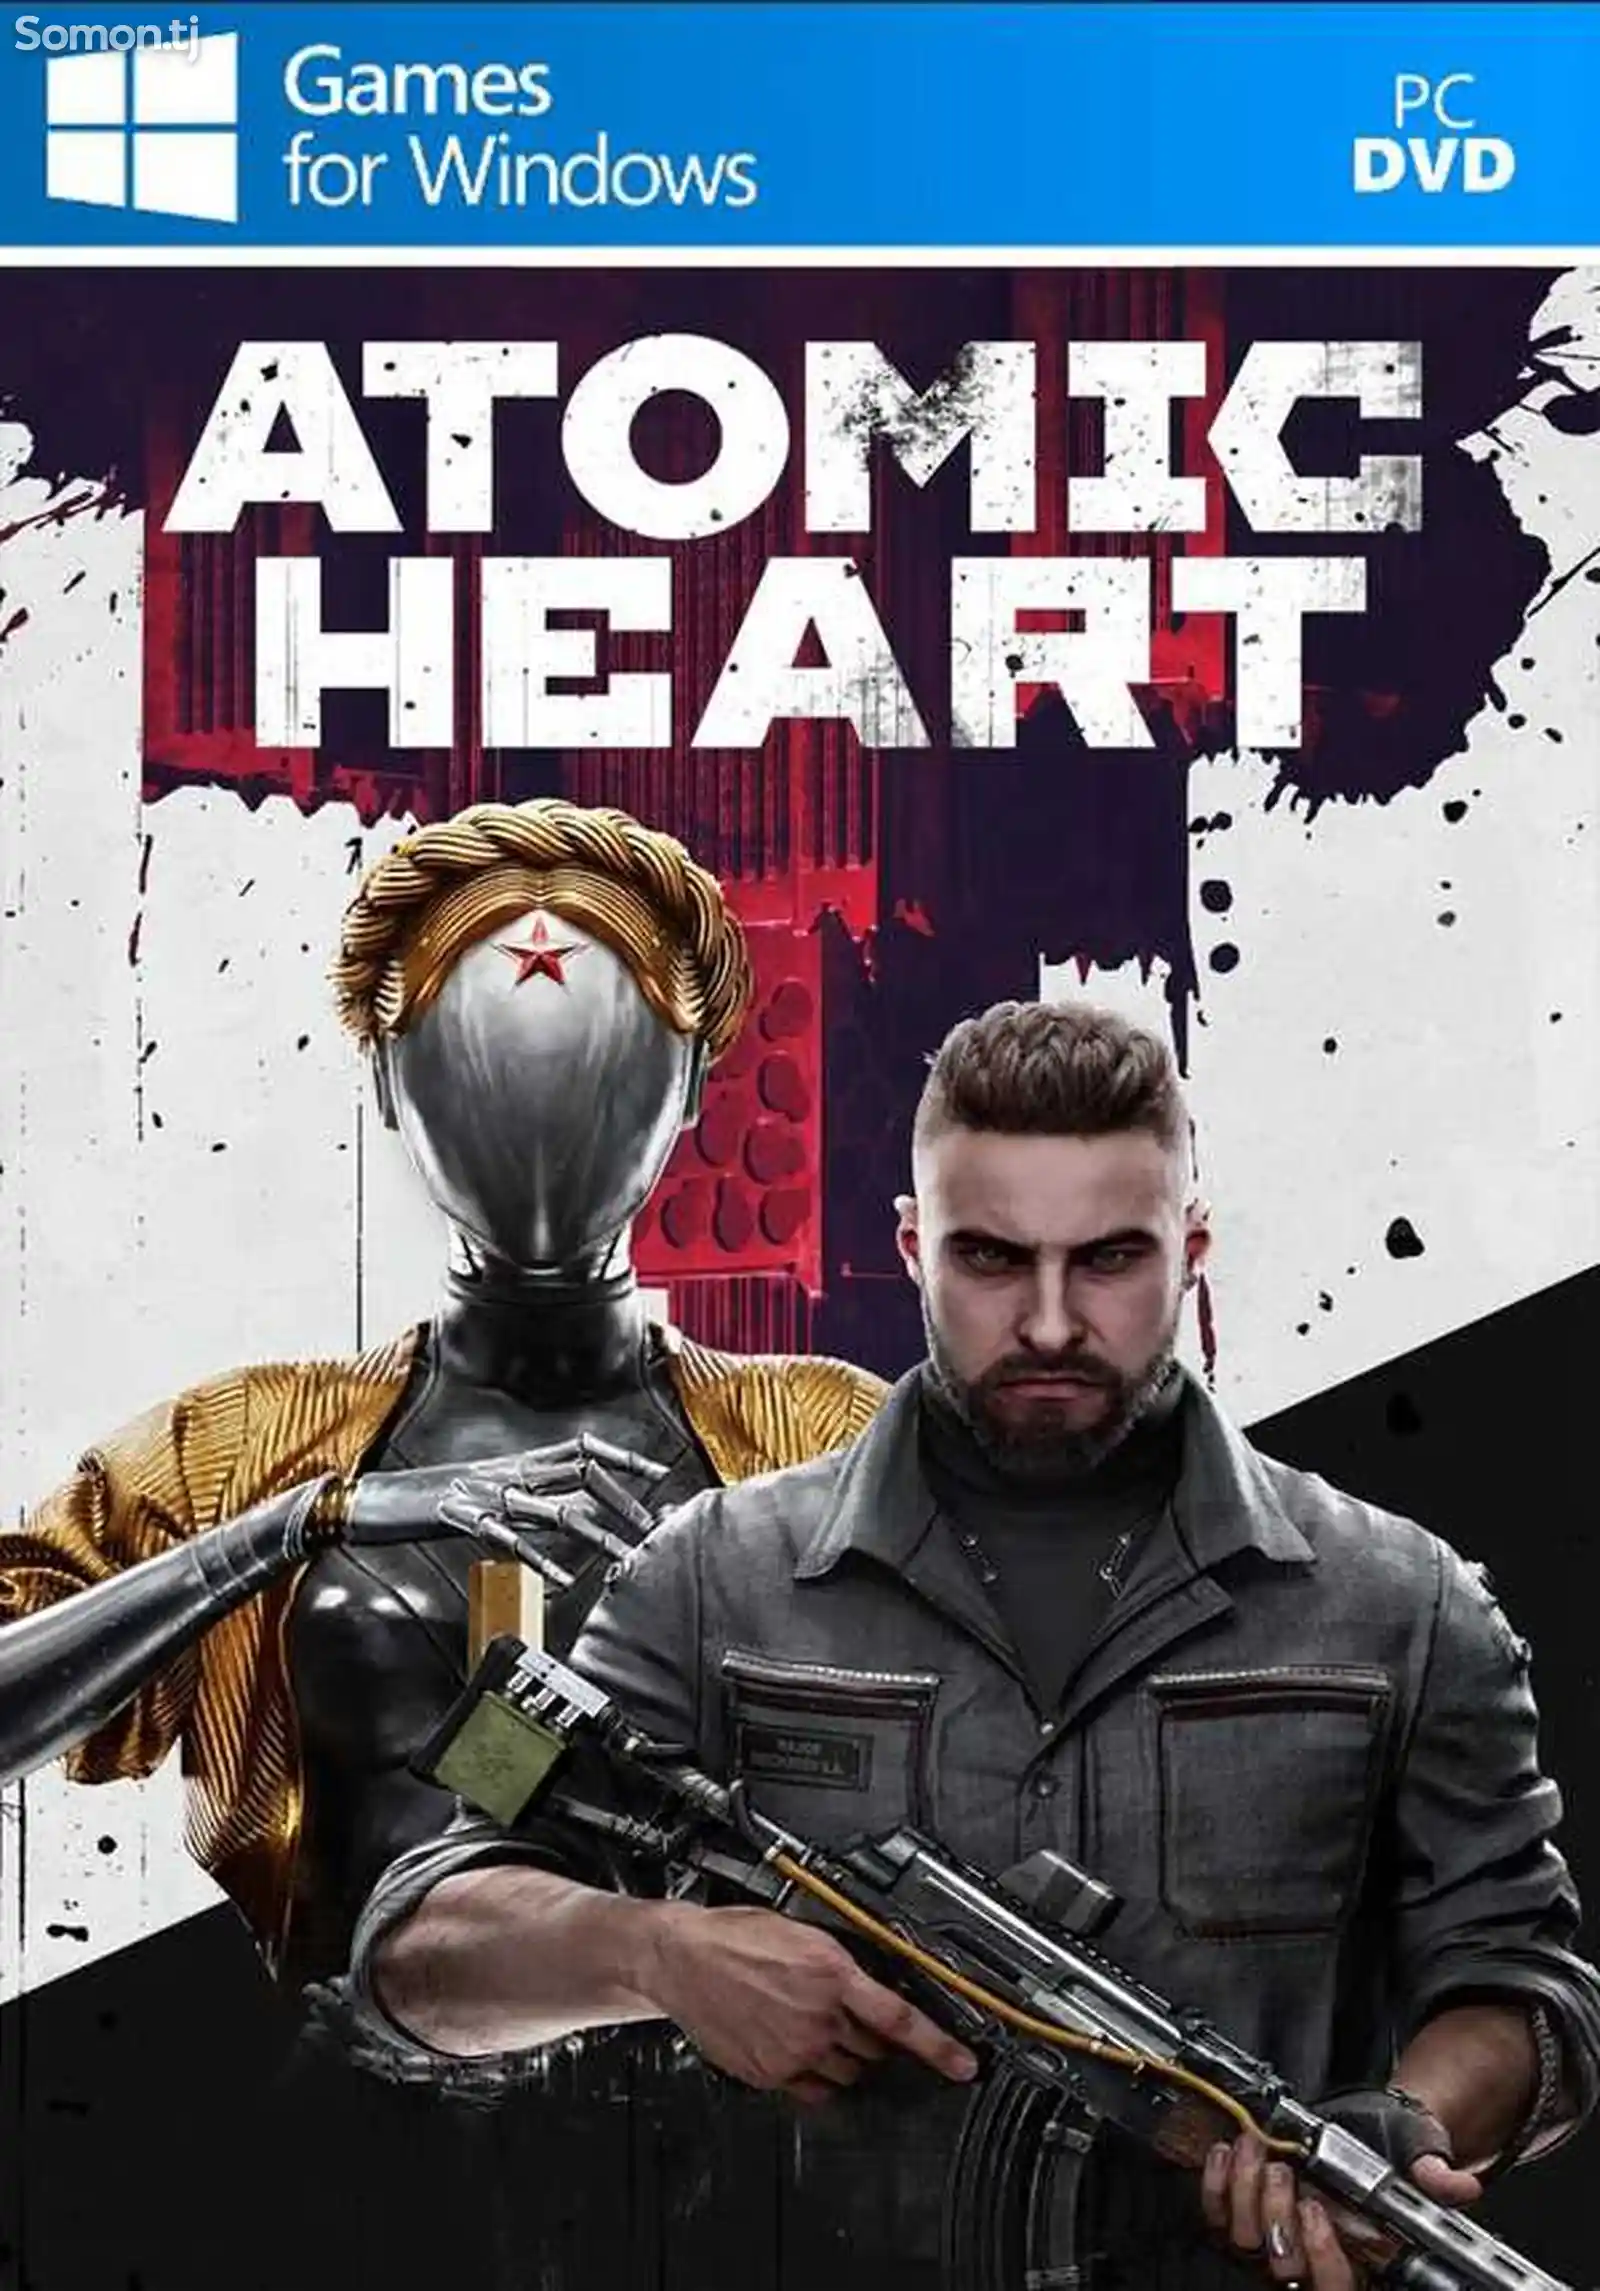 Игра Atomic heart для компьютера-пк-pc-1